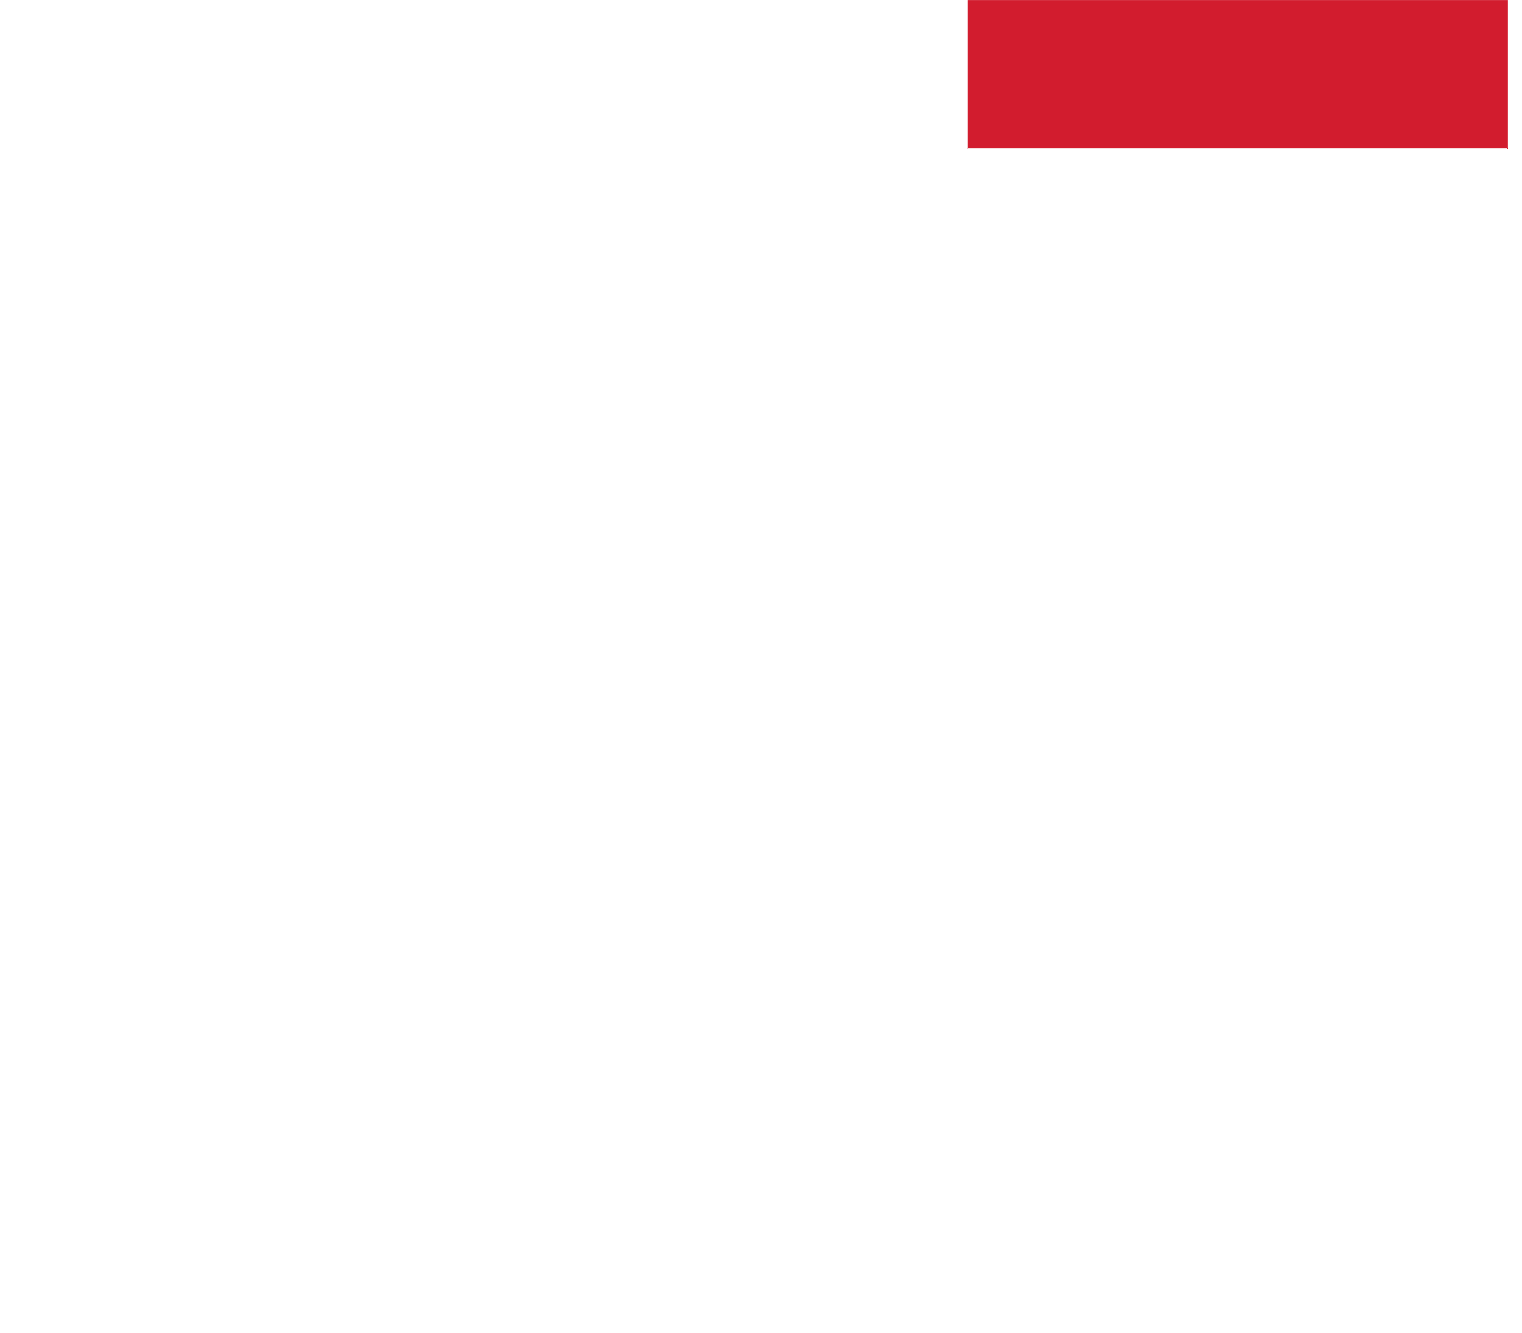 Cadence Design Systems logo for dark backgrounds (transparent PNG)